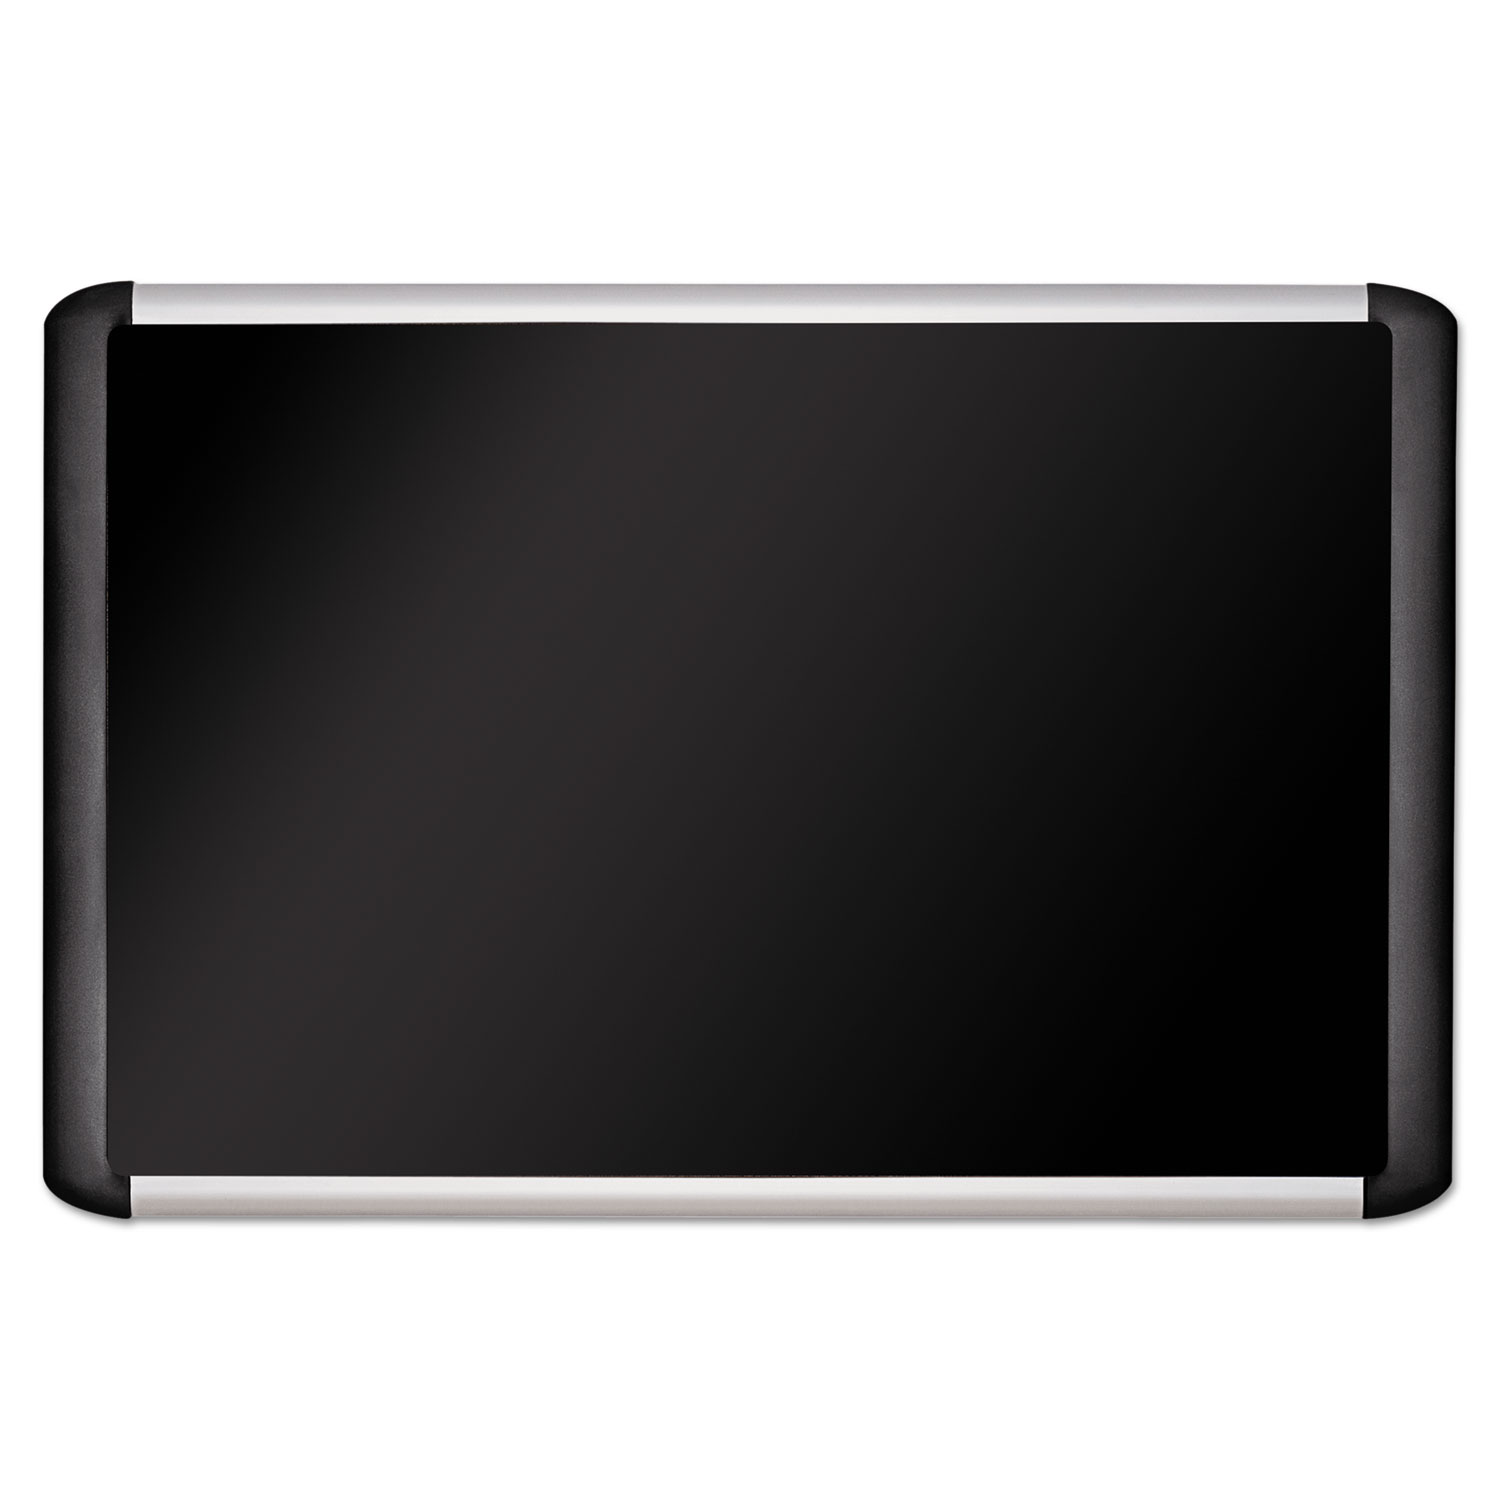  MasterVision MVI270301 Black fabric bulletin board, 48 x 72, Silver/Black (BVCMVI270301) 